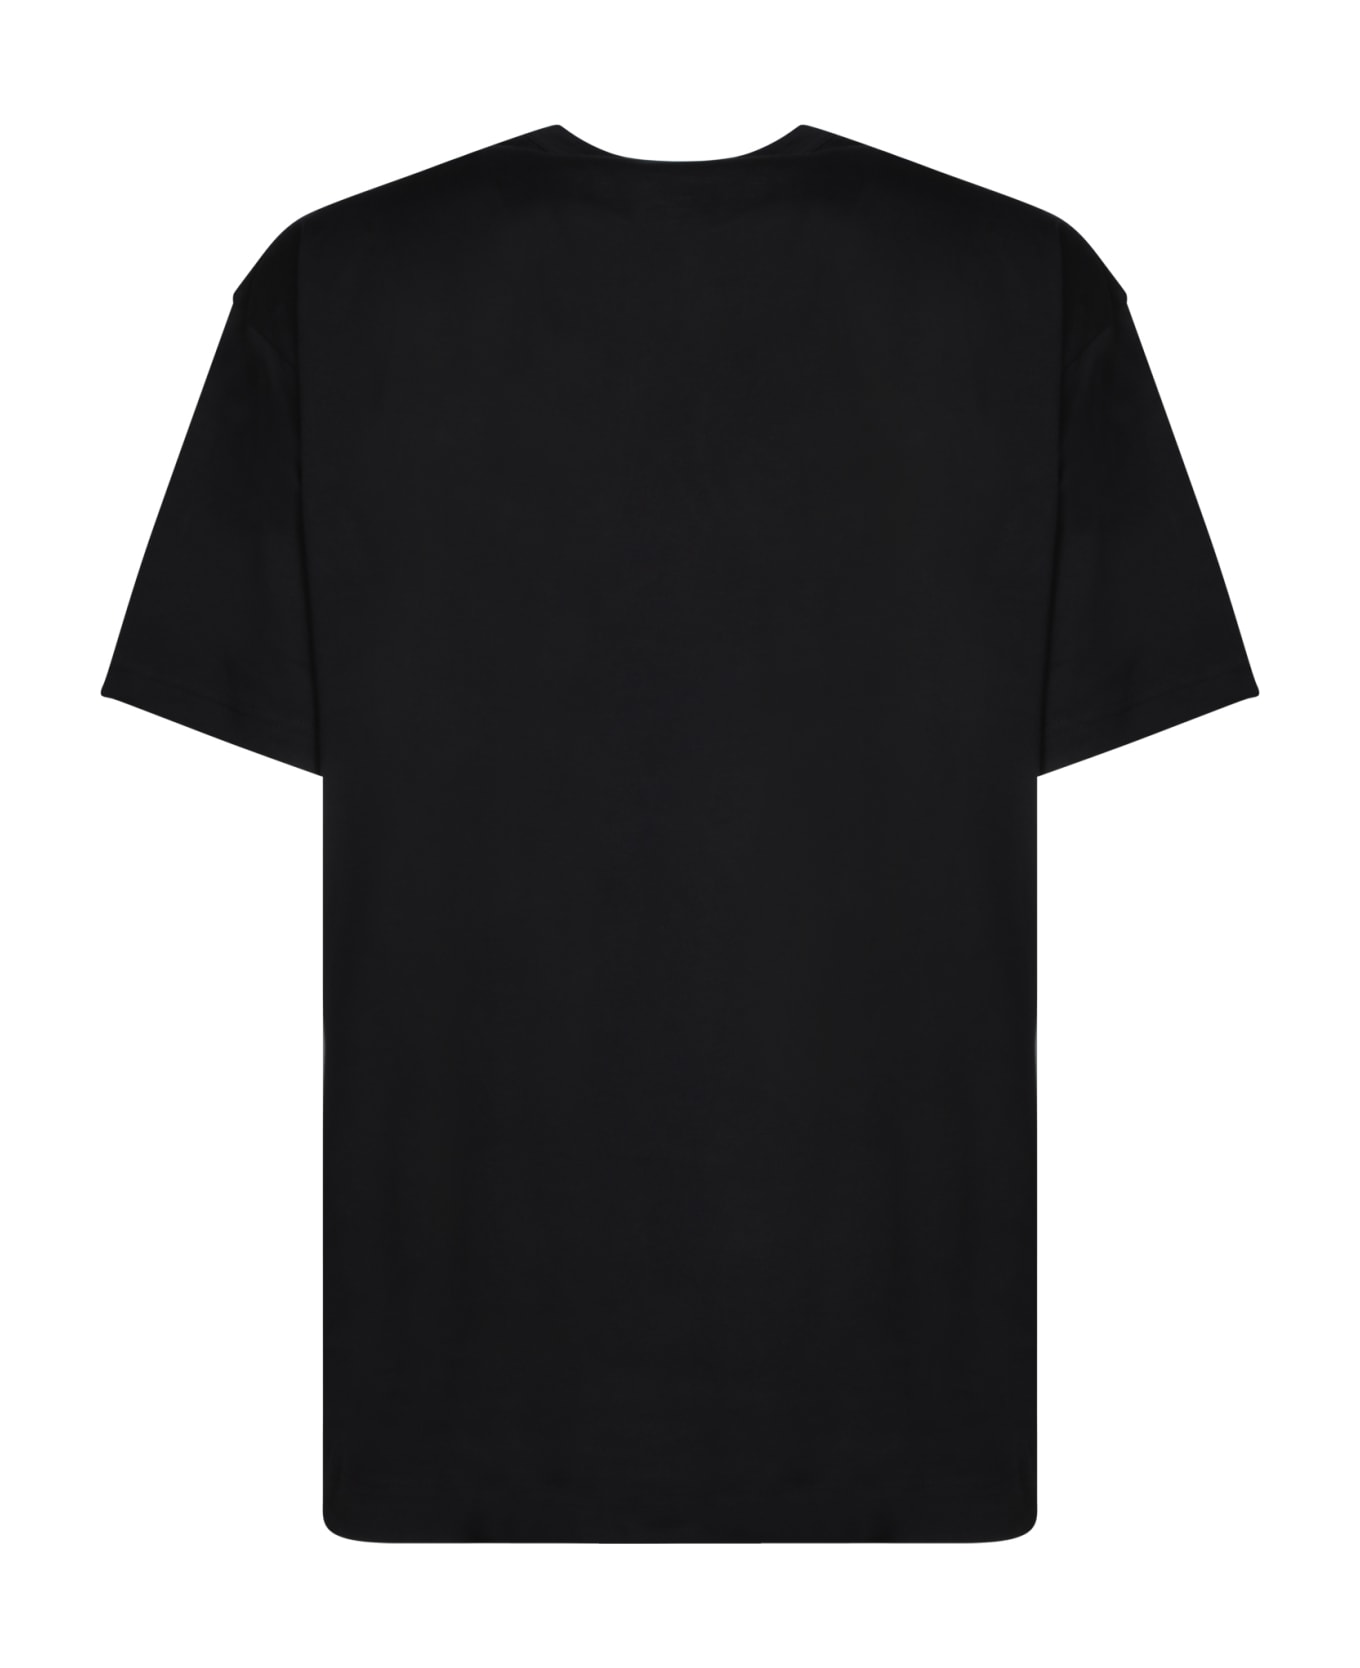 Comme des Garçons Shirt Oversize Black T-shirt - Black シャツ